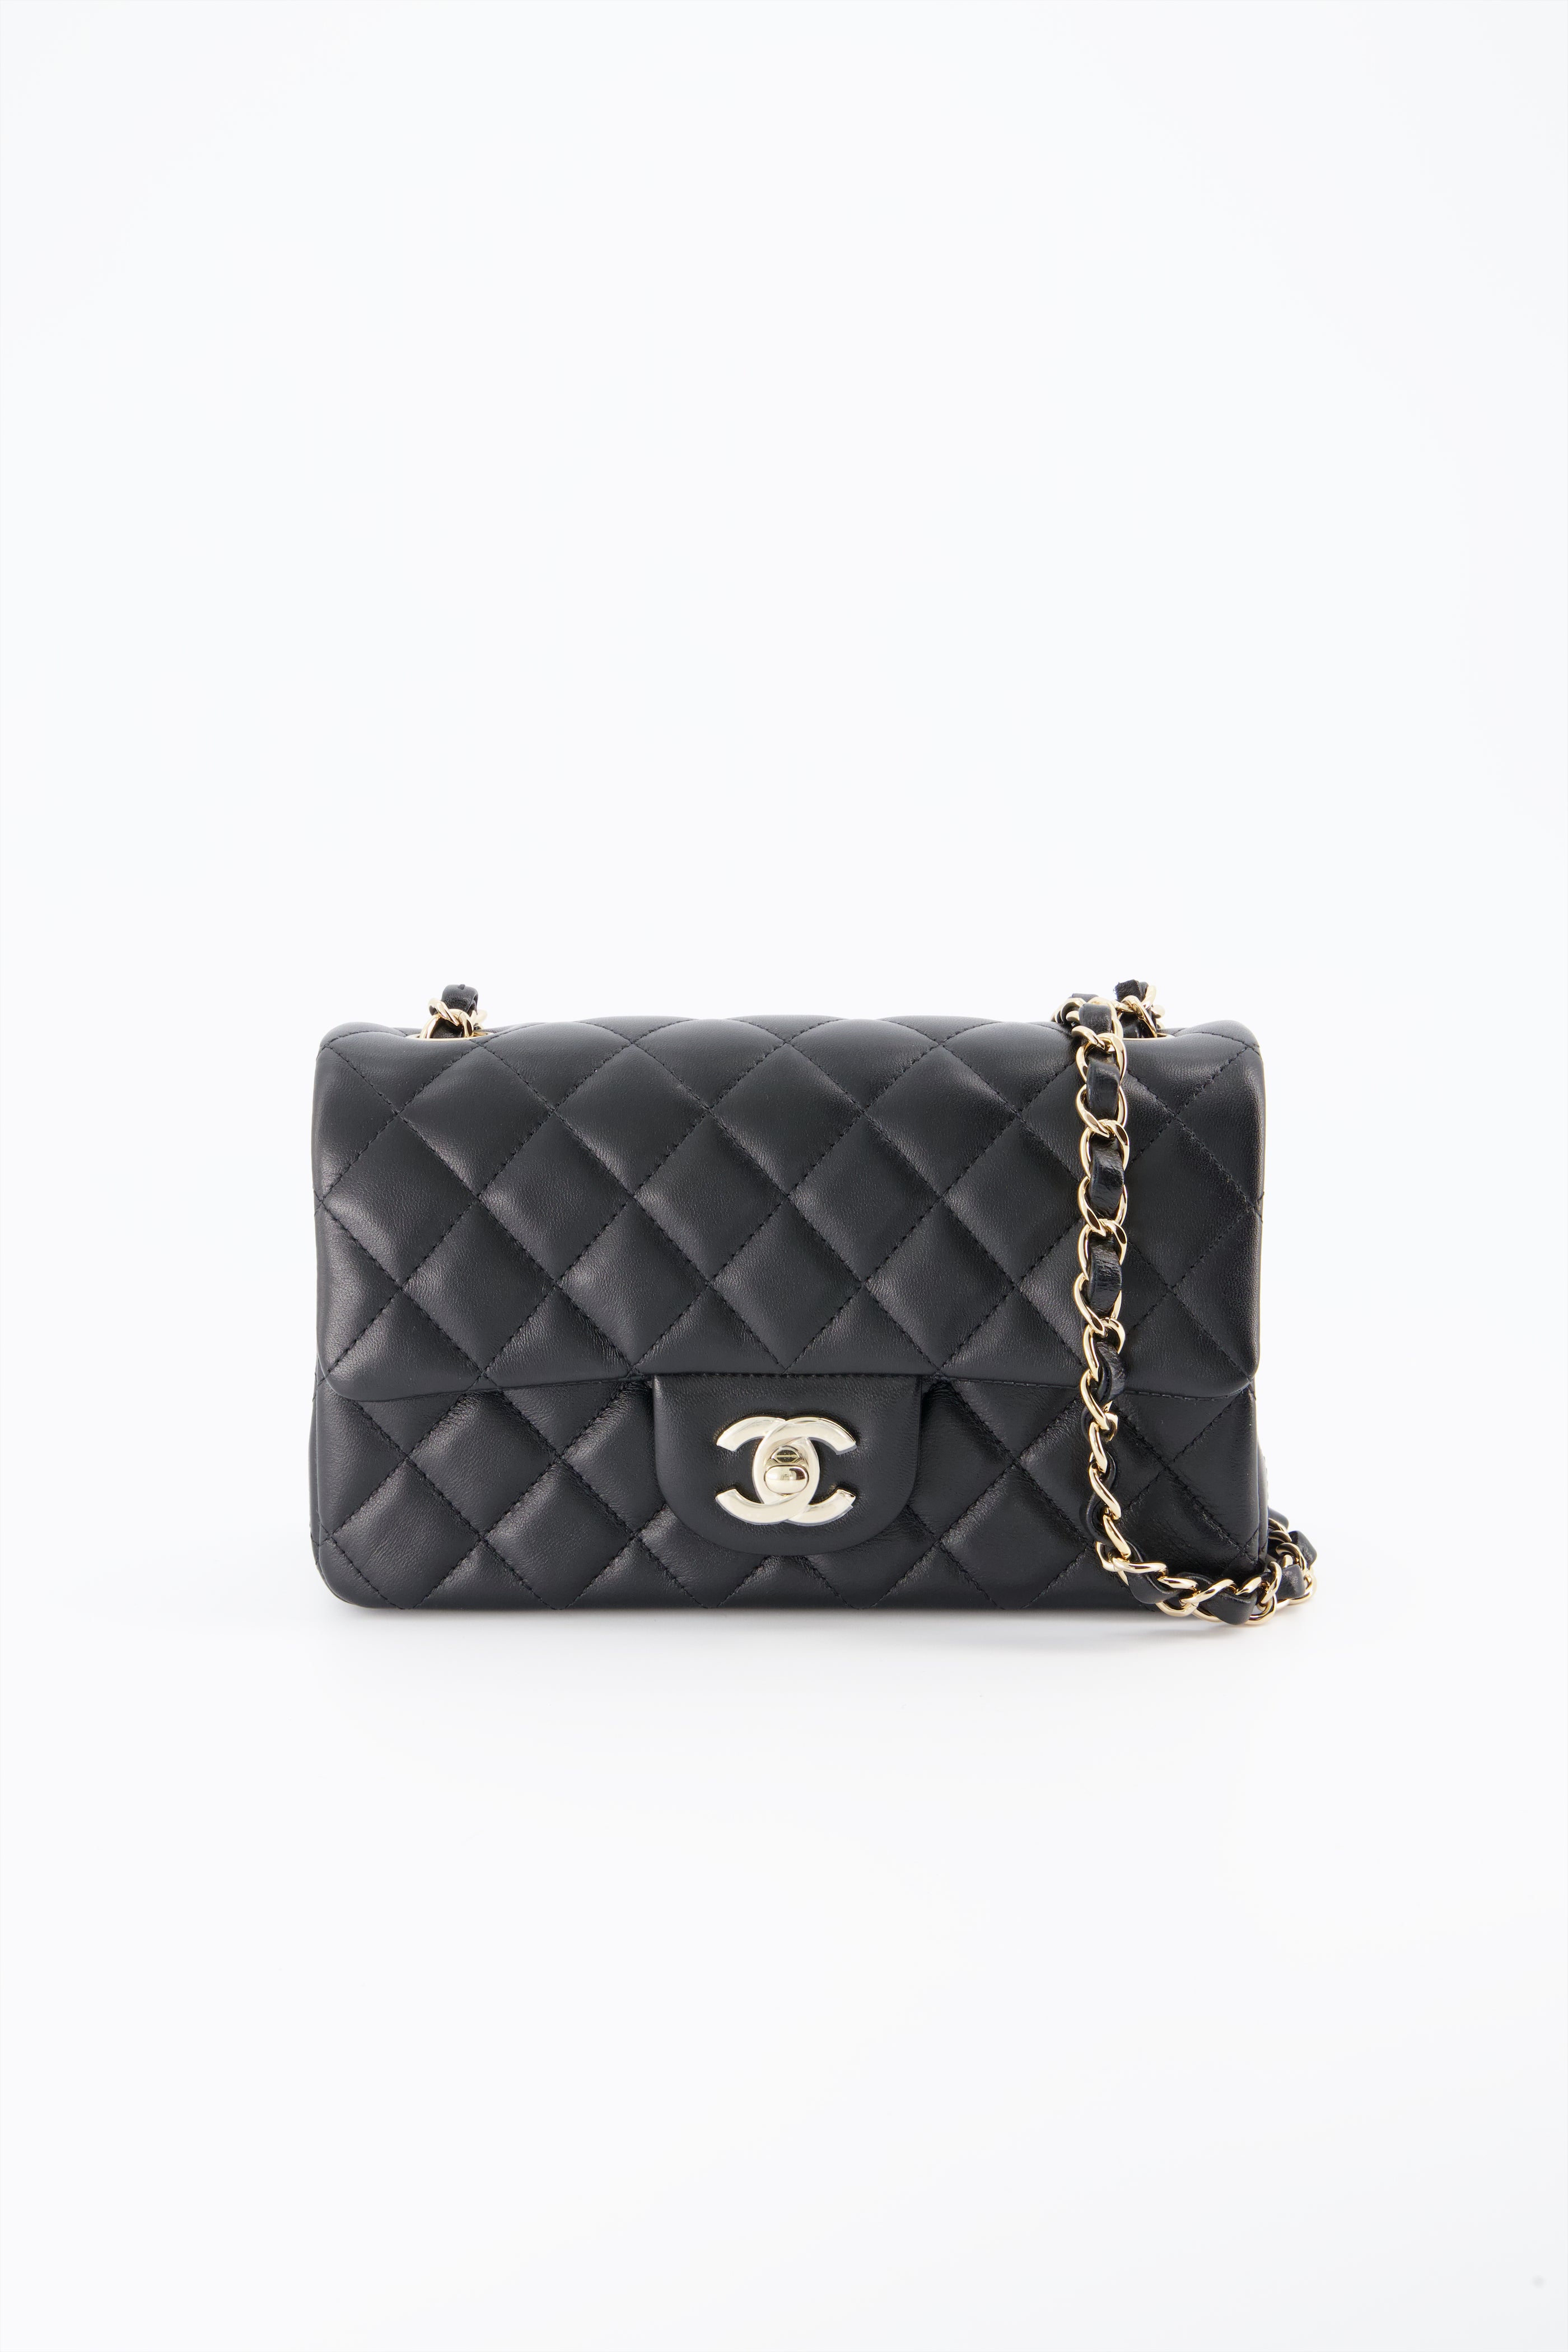 Chanel Black Mini Rectangular Bag